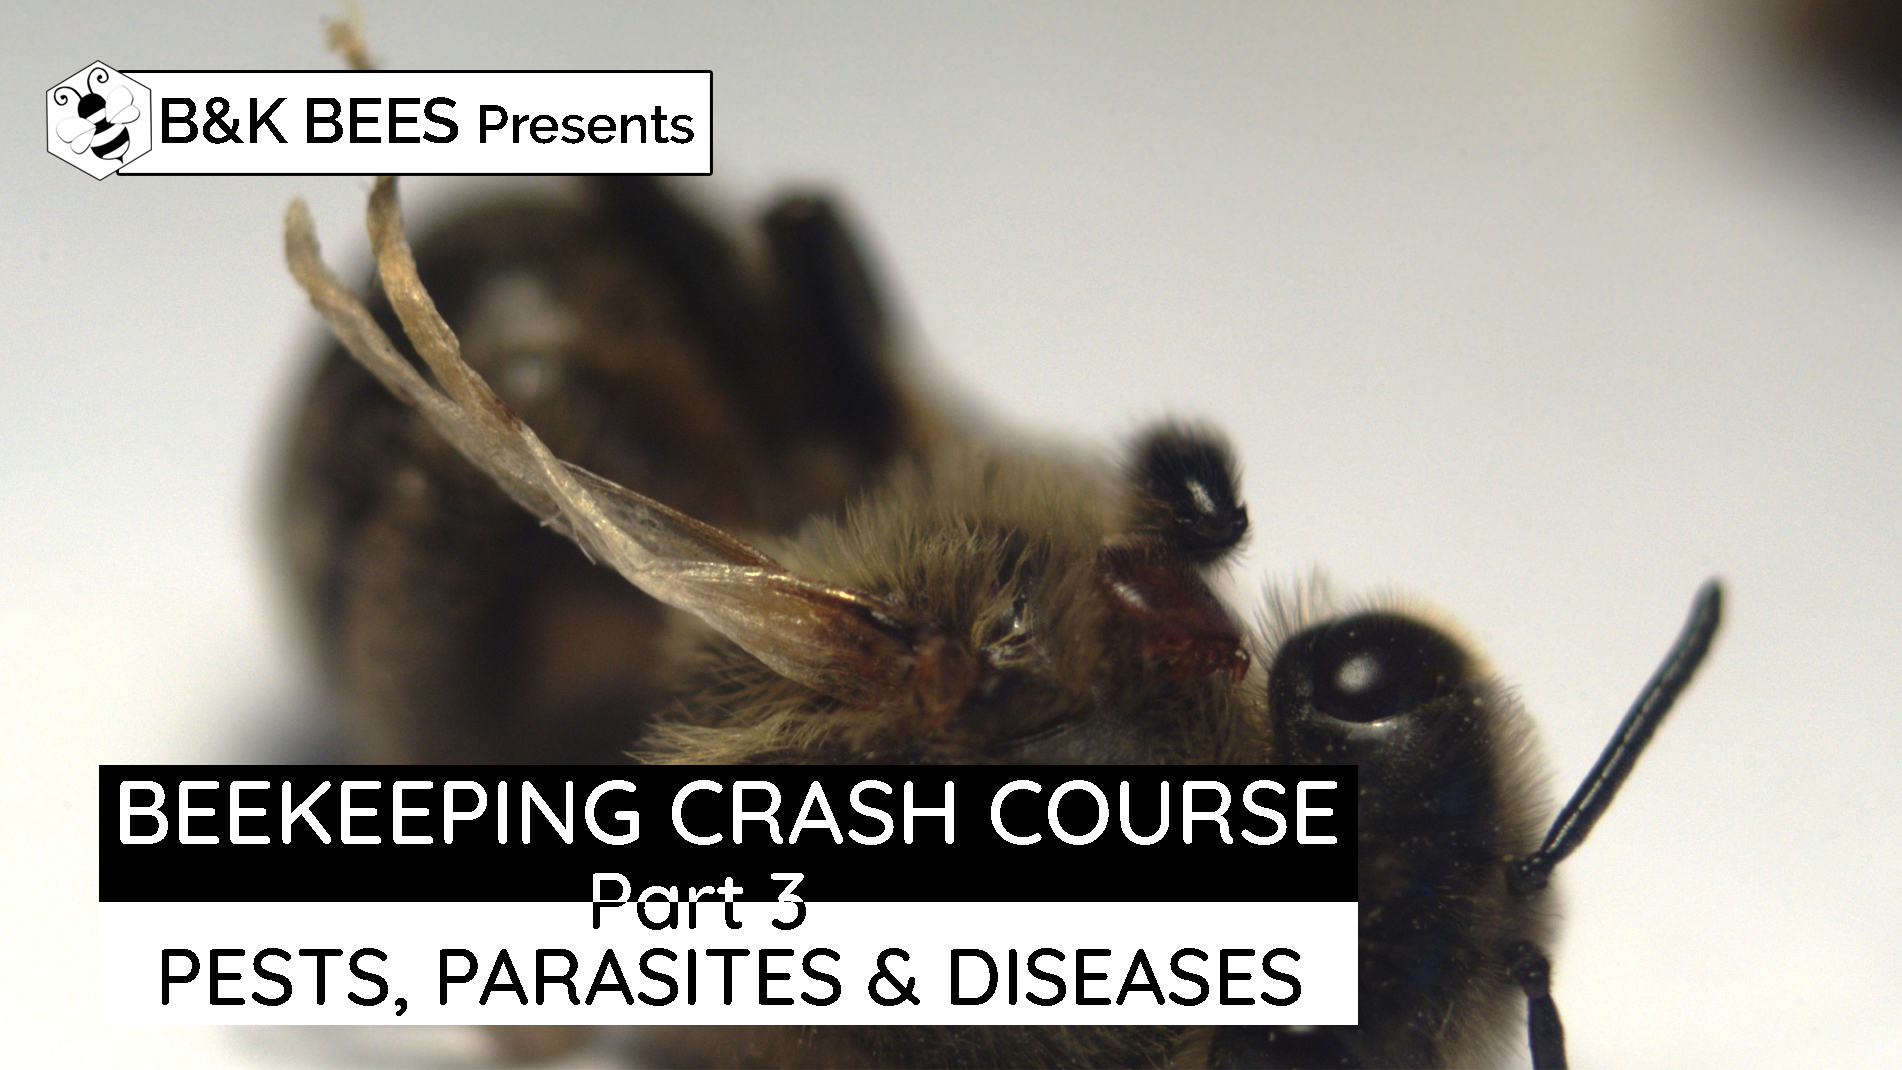 Honey Bee Pests, Parasites And Diseases – Beekeeping Crash Course Part 3 – Slideshow Presentation